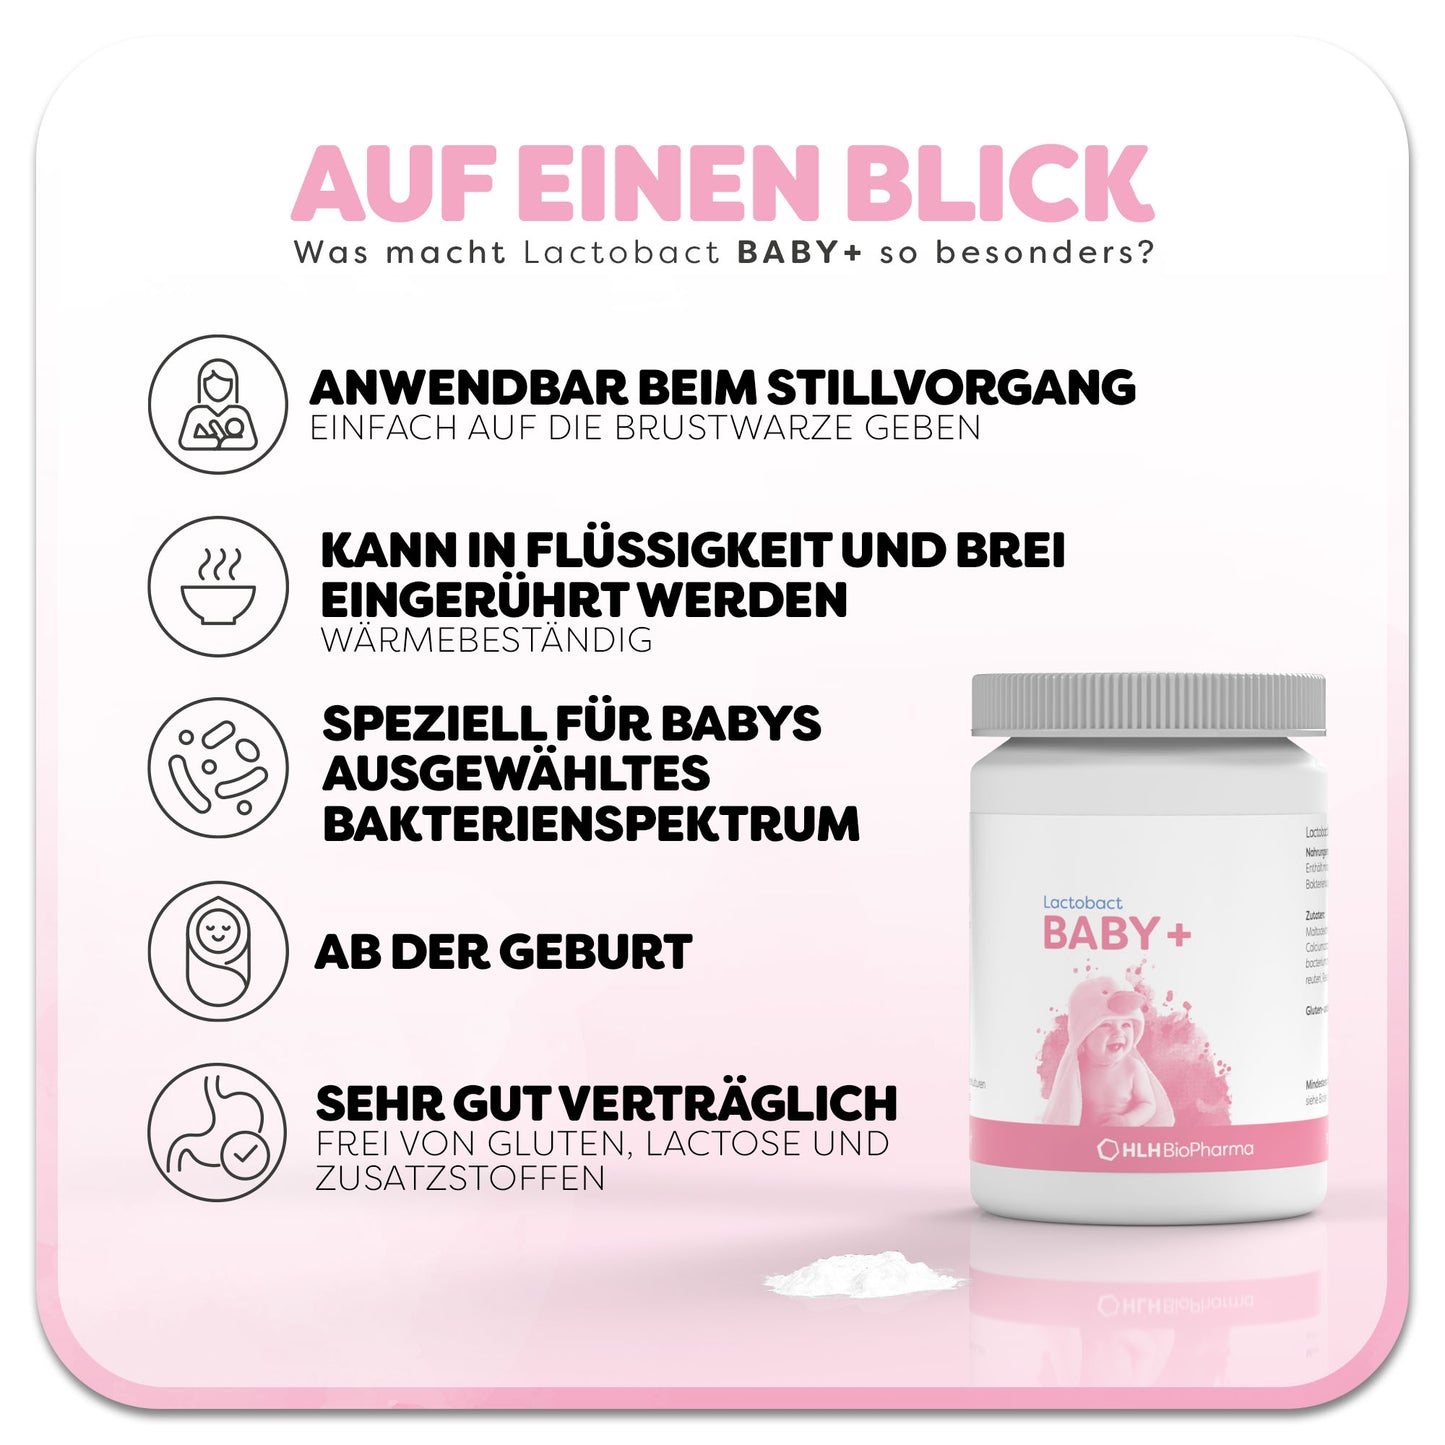 Informationsblatt zum Produkt Lactobact Baby plus